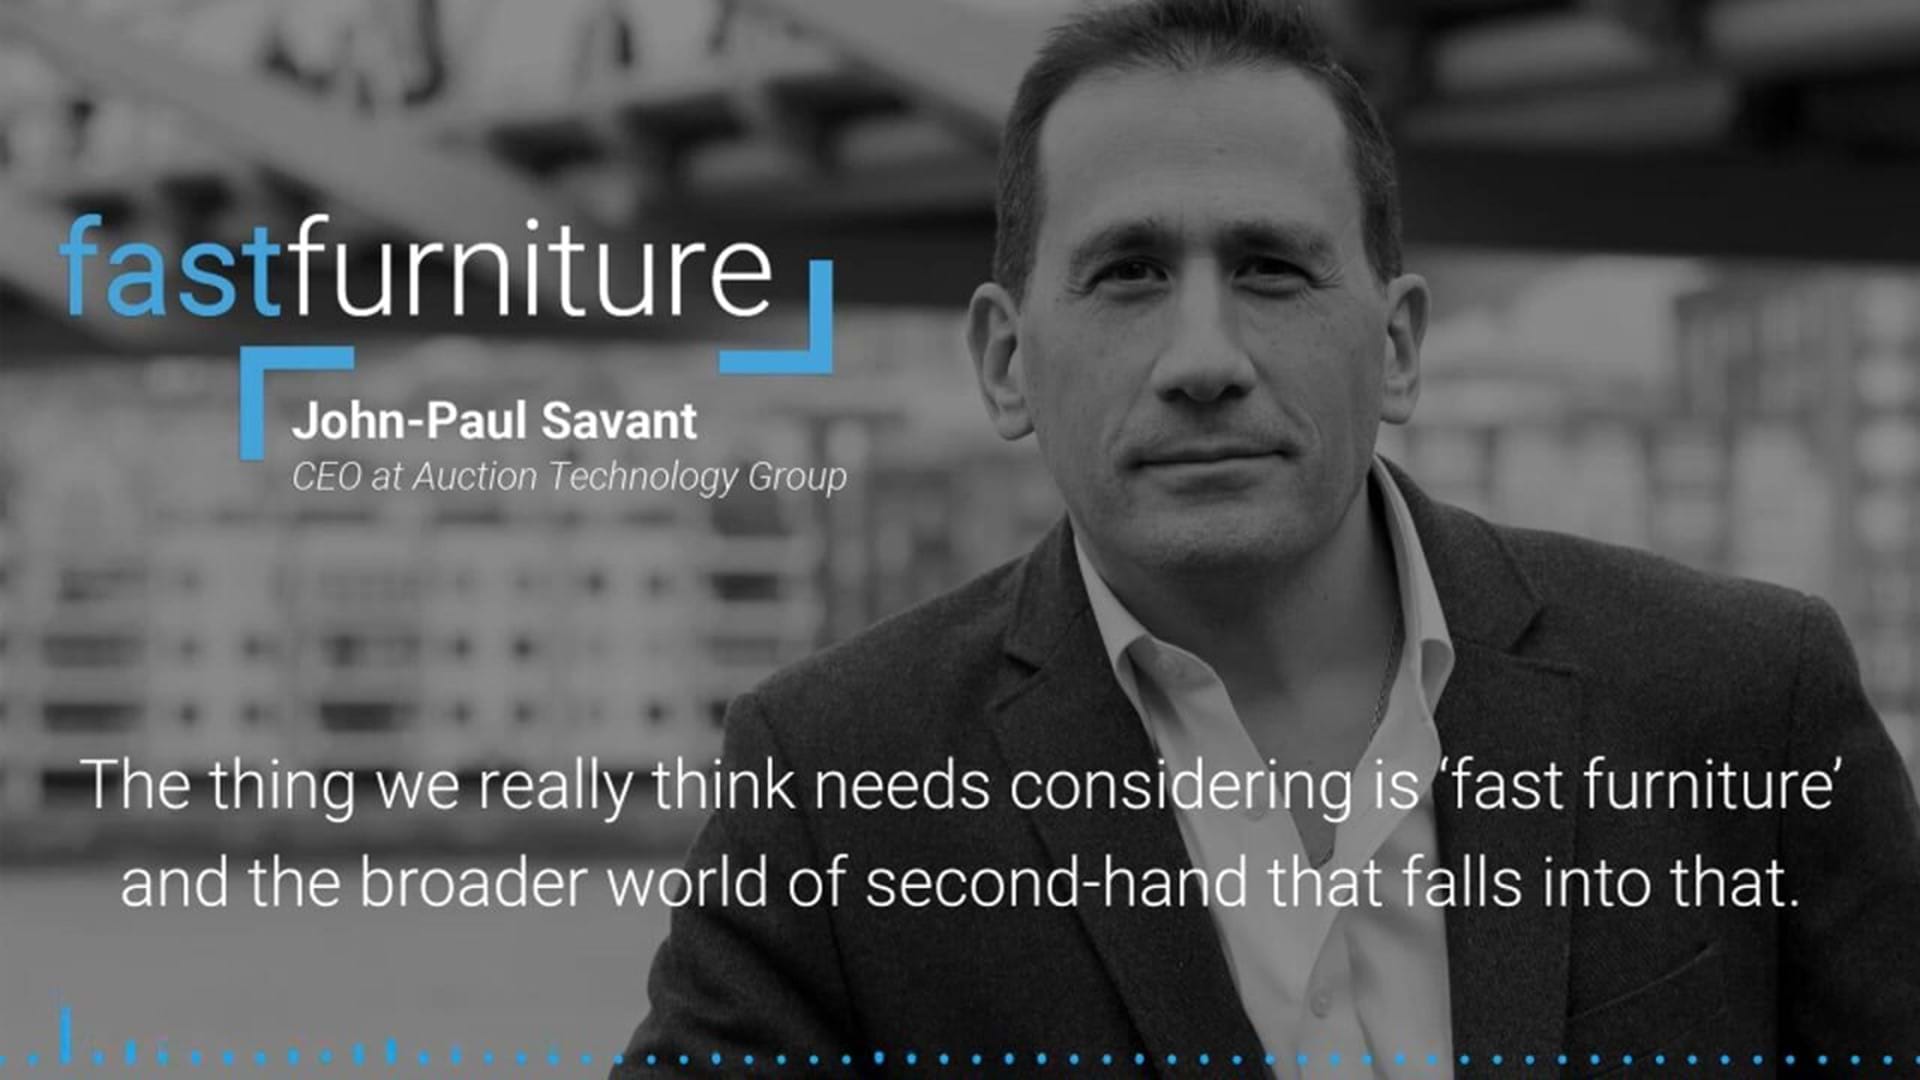 John Paul Savant, CEO, ATG, On The Environmental Impact Of ‘Fast Furniture’